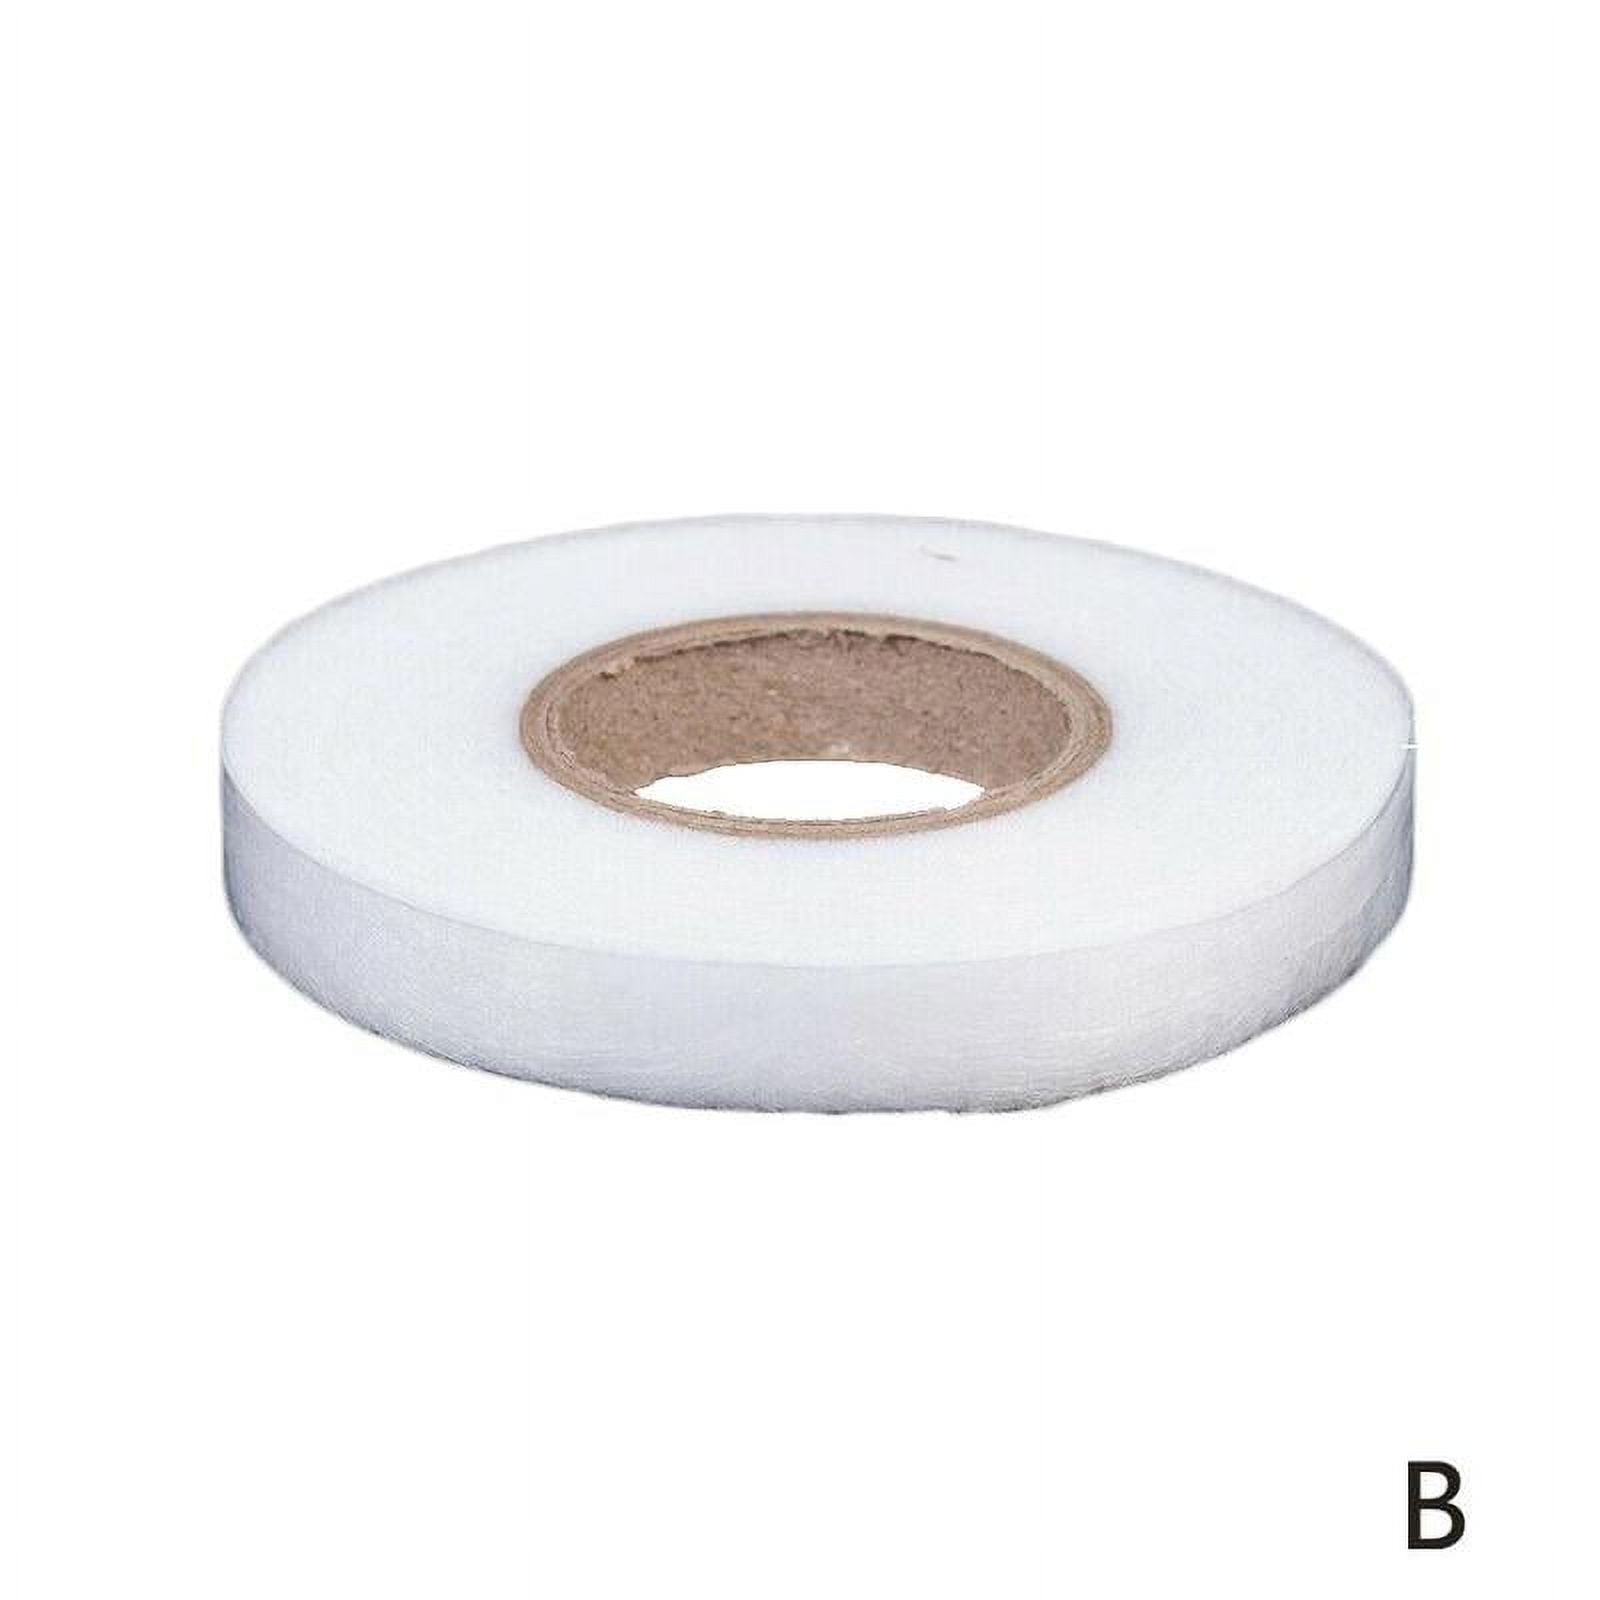 Jytue Polyester Iron-On Hem Clothing Tape Adhesive Hem Tape Pants Fabric Tape No Sew Iron on Hemming Tape Fabric Fusing Tape Roll for Sewing Pants